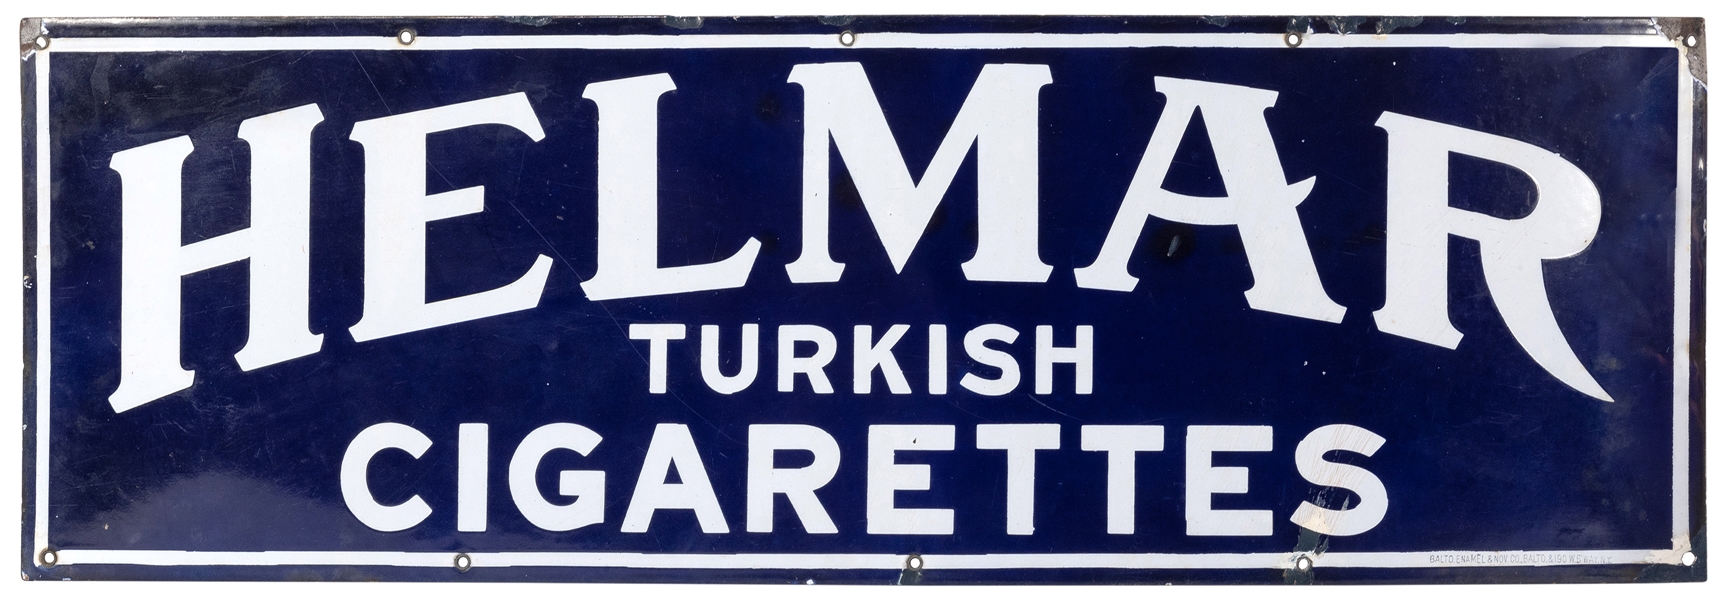  Helmar Turkish Cigarettes Porcelain Sign. New York: Balto E...